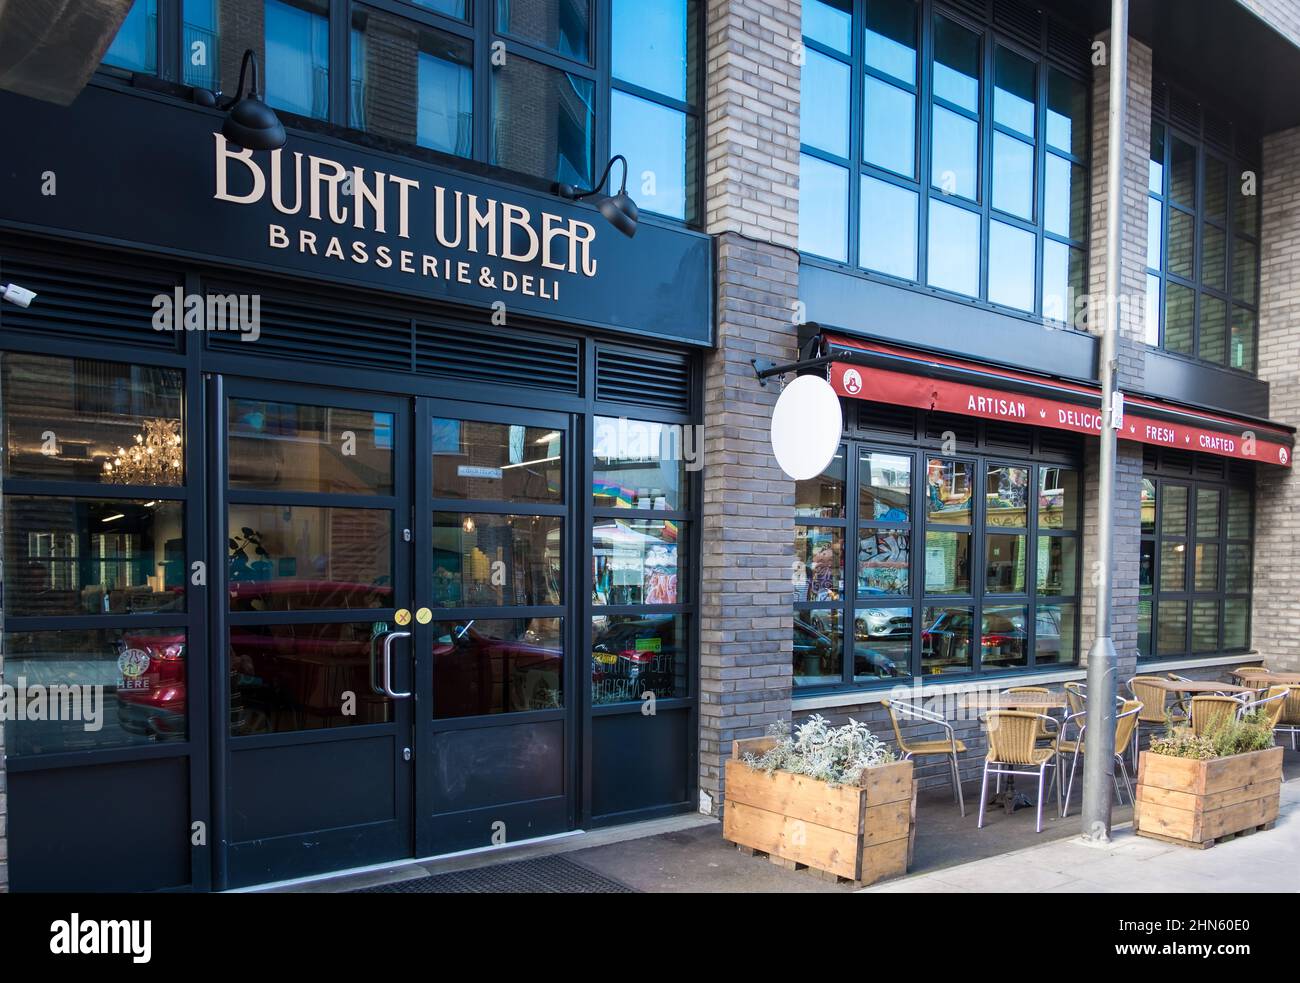 Burnt Umber brasserie and deli in Hackney Wick, East London Stock Photo